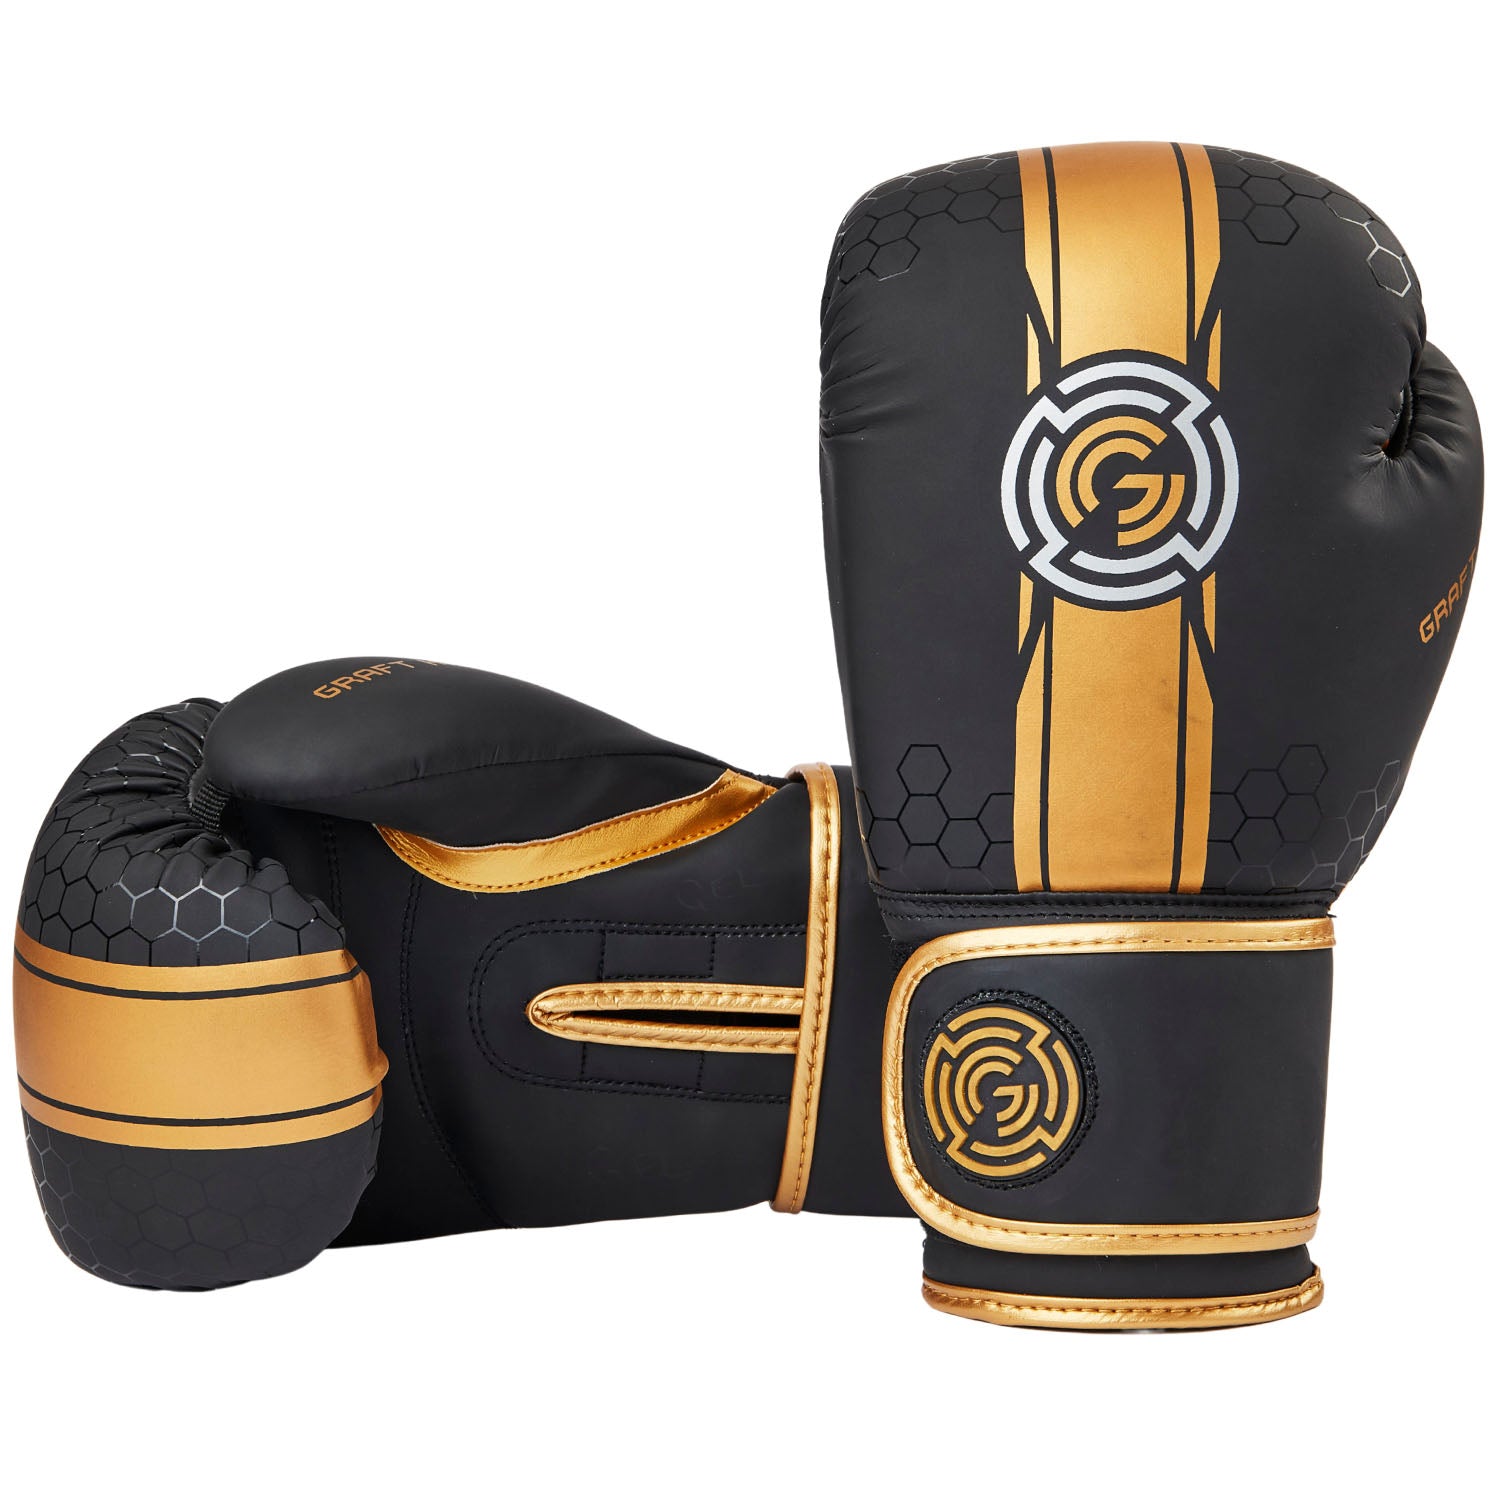 Heavy Boxing Gloves